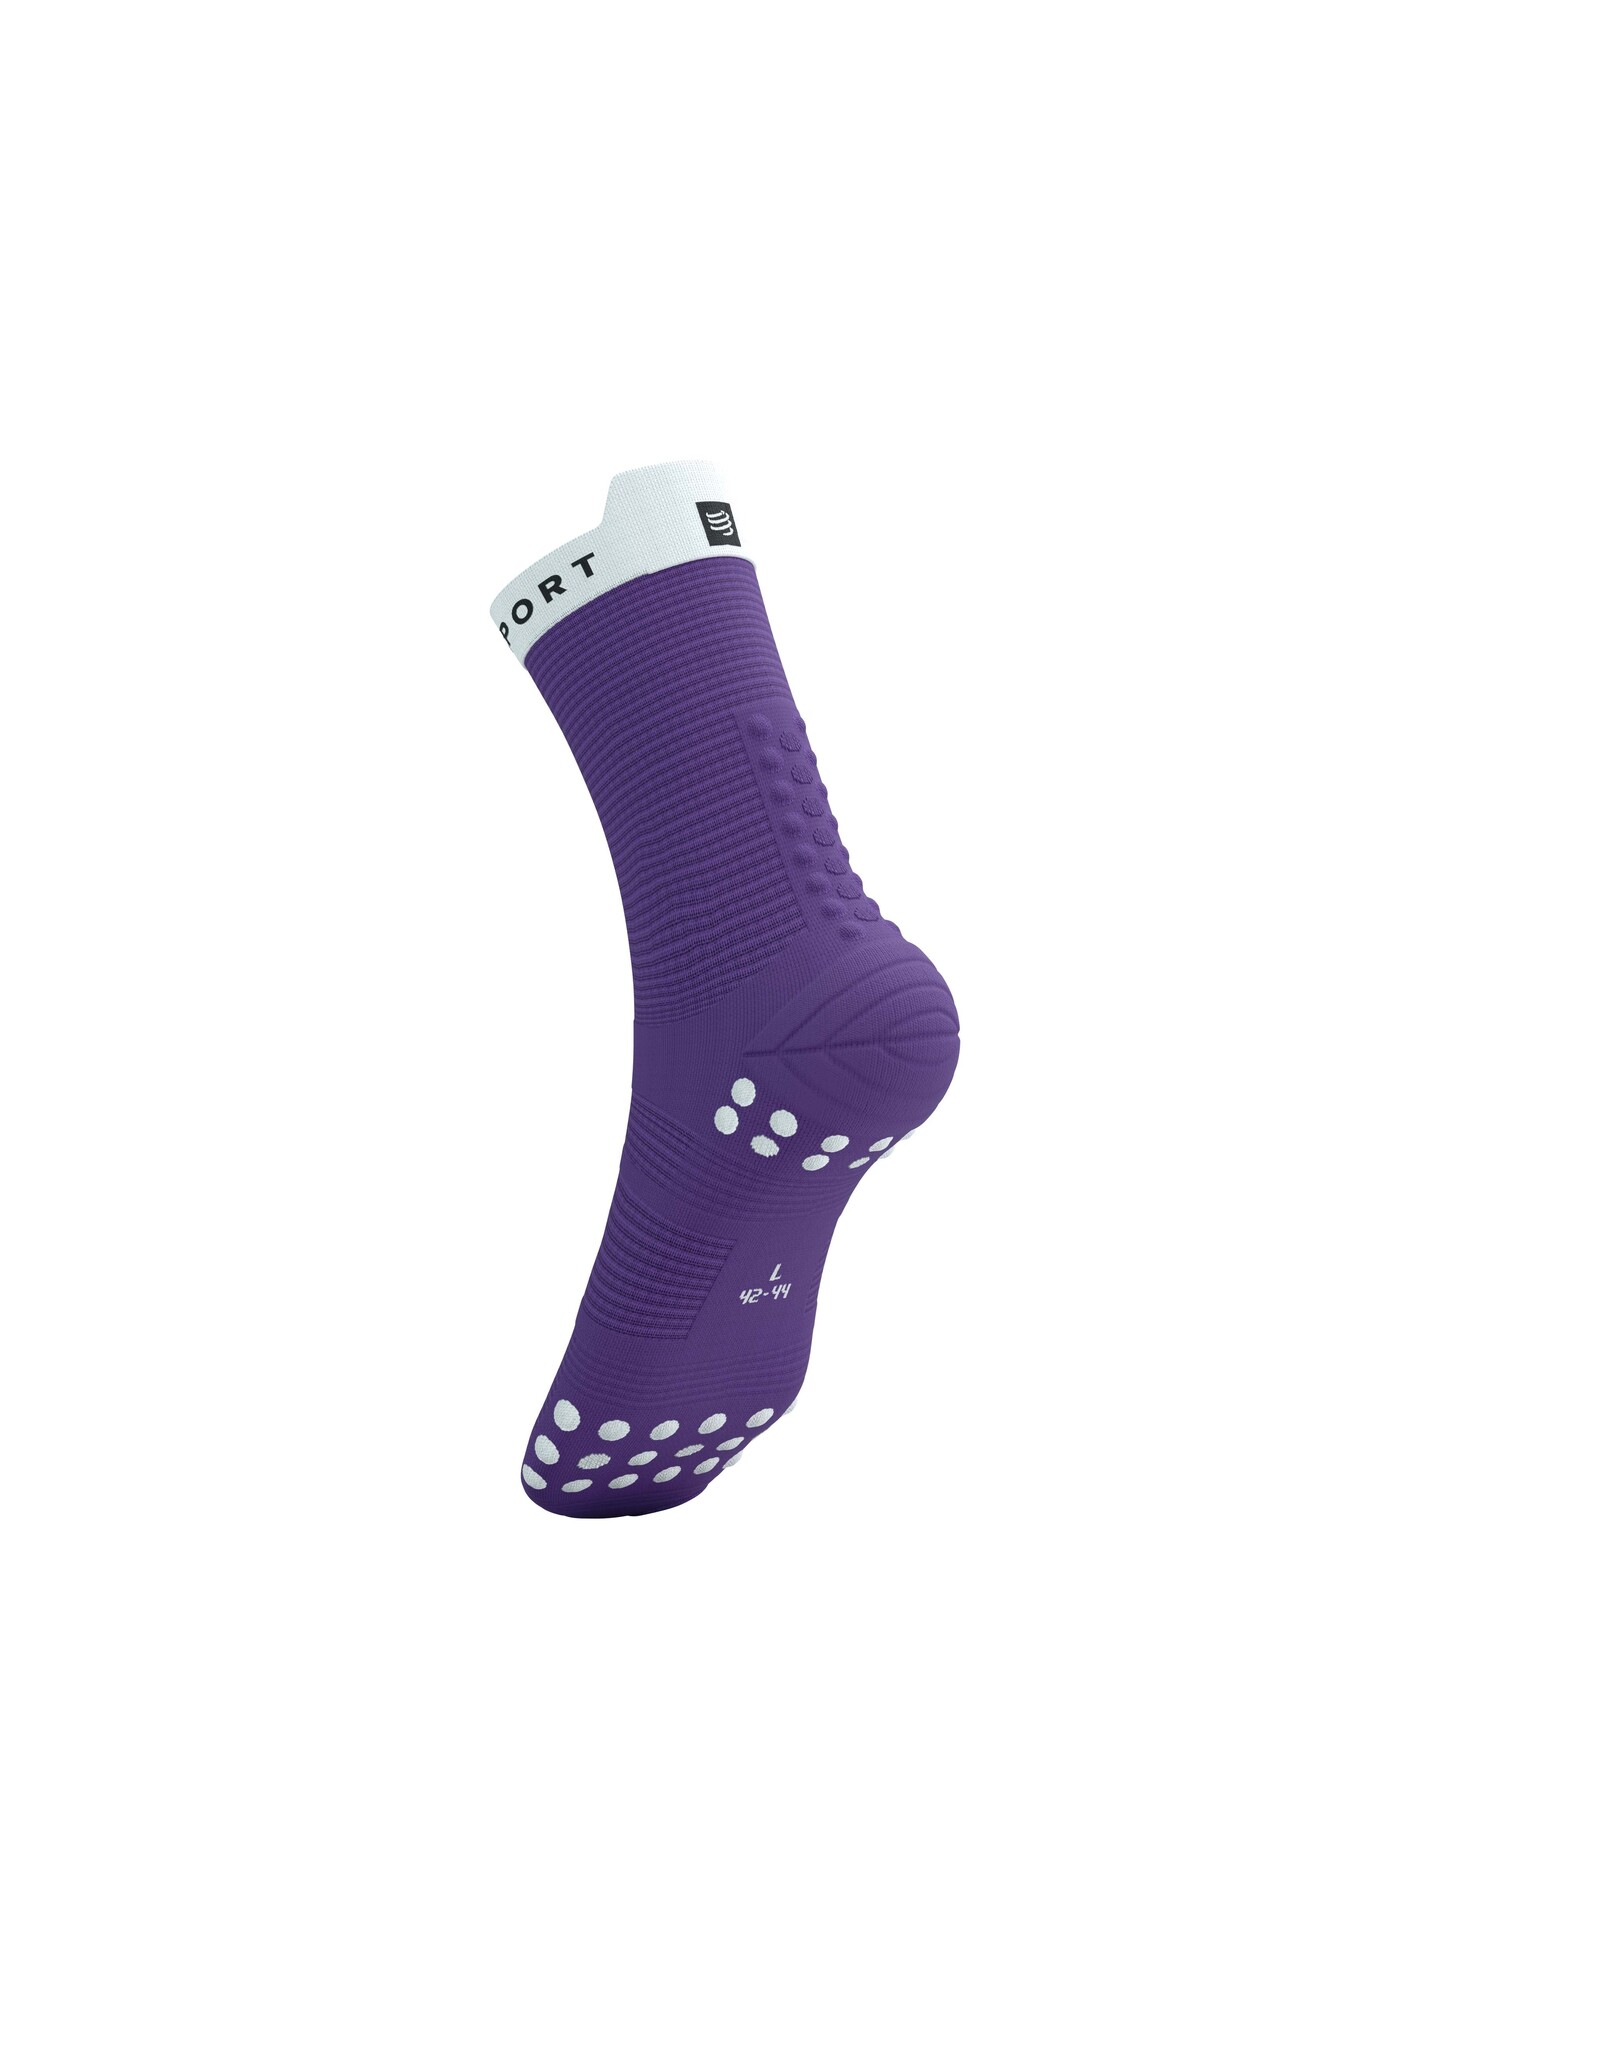 Compressport Pro Racing Socks v4.0 Run High - Royal Lilac/White